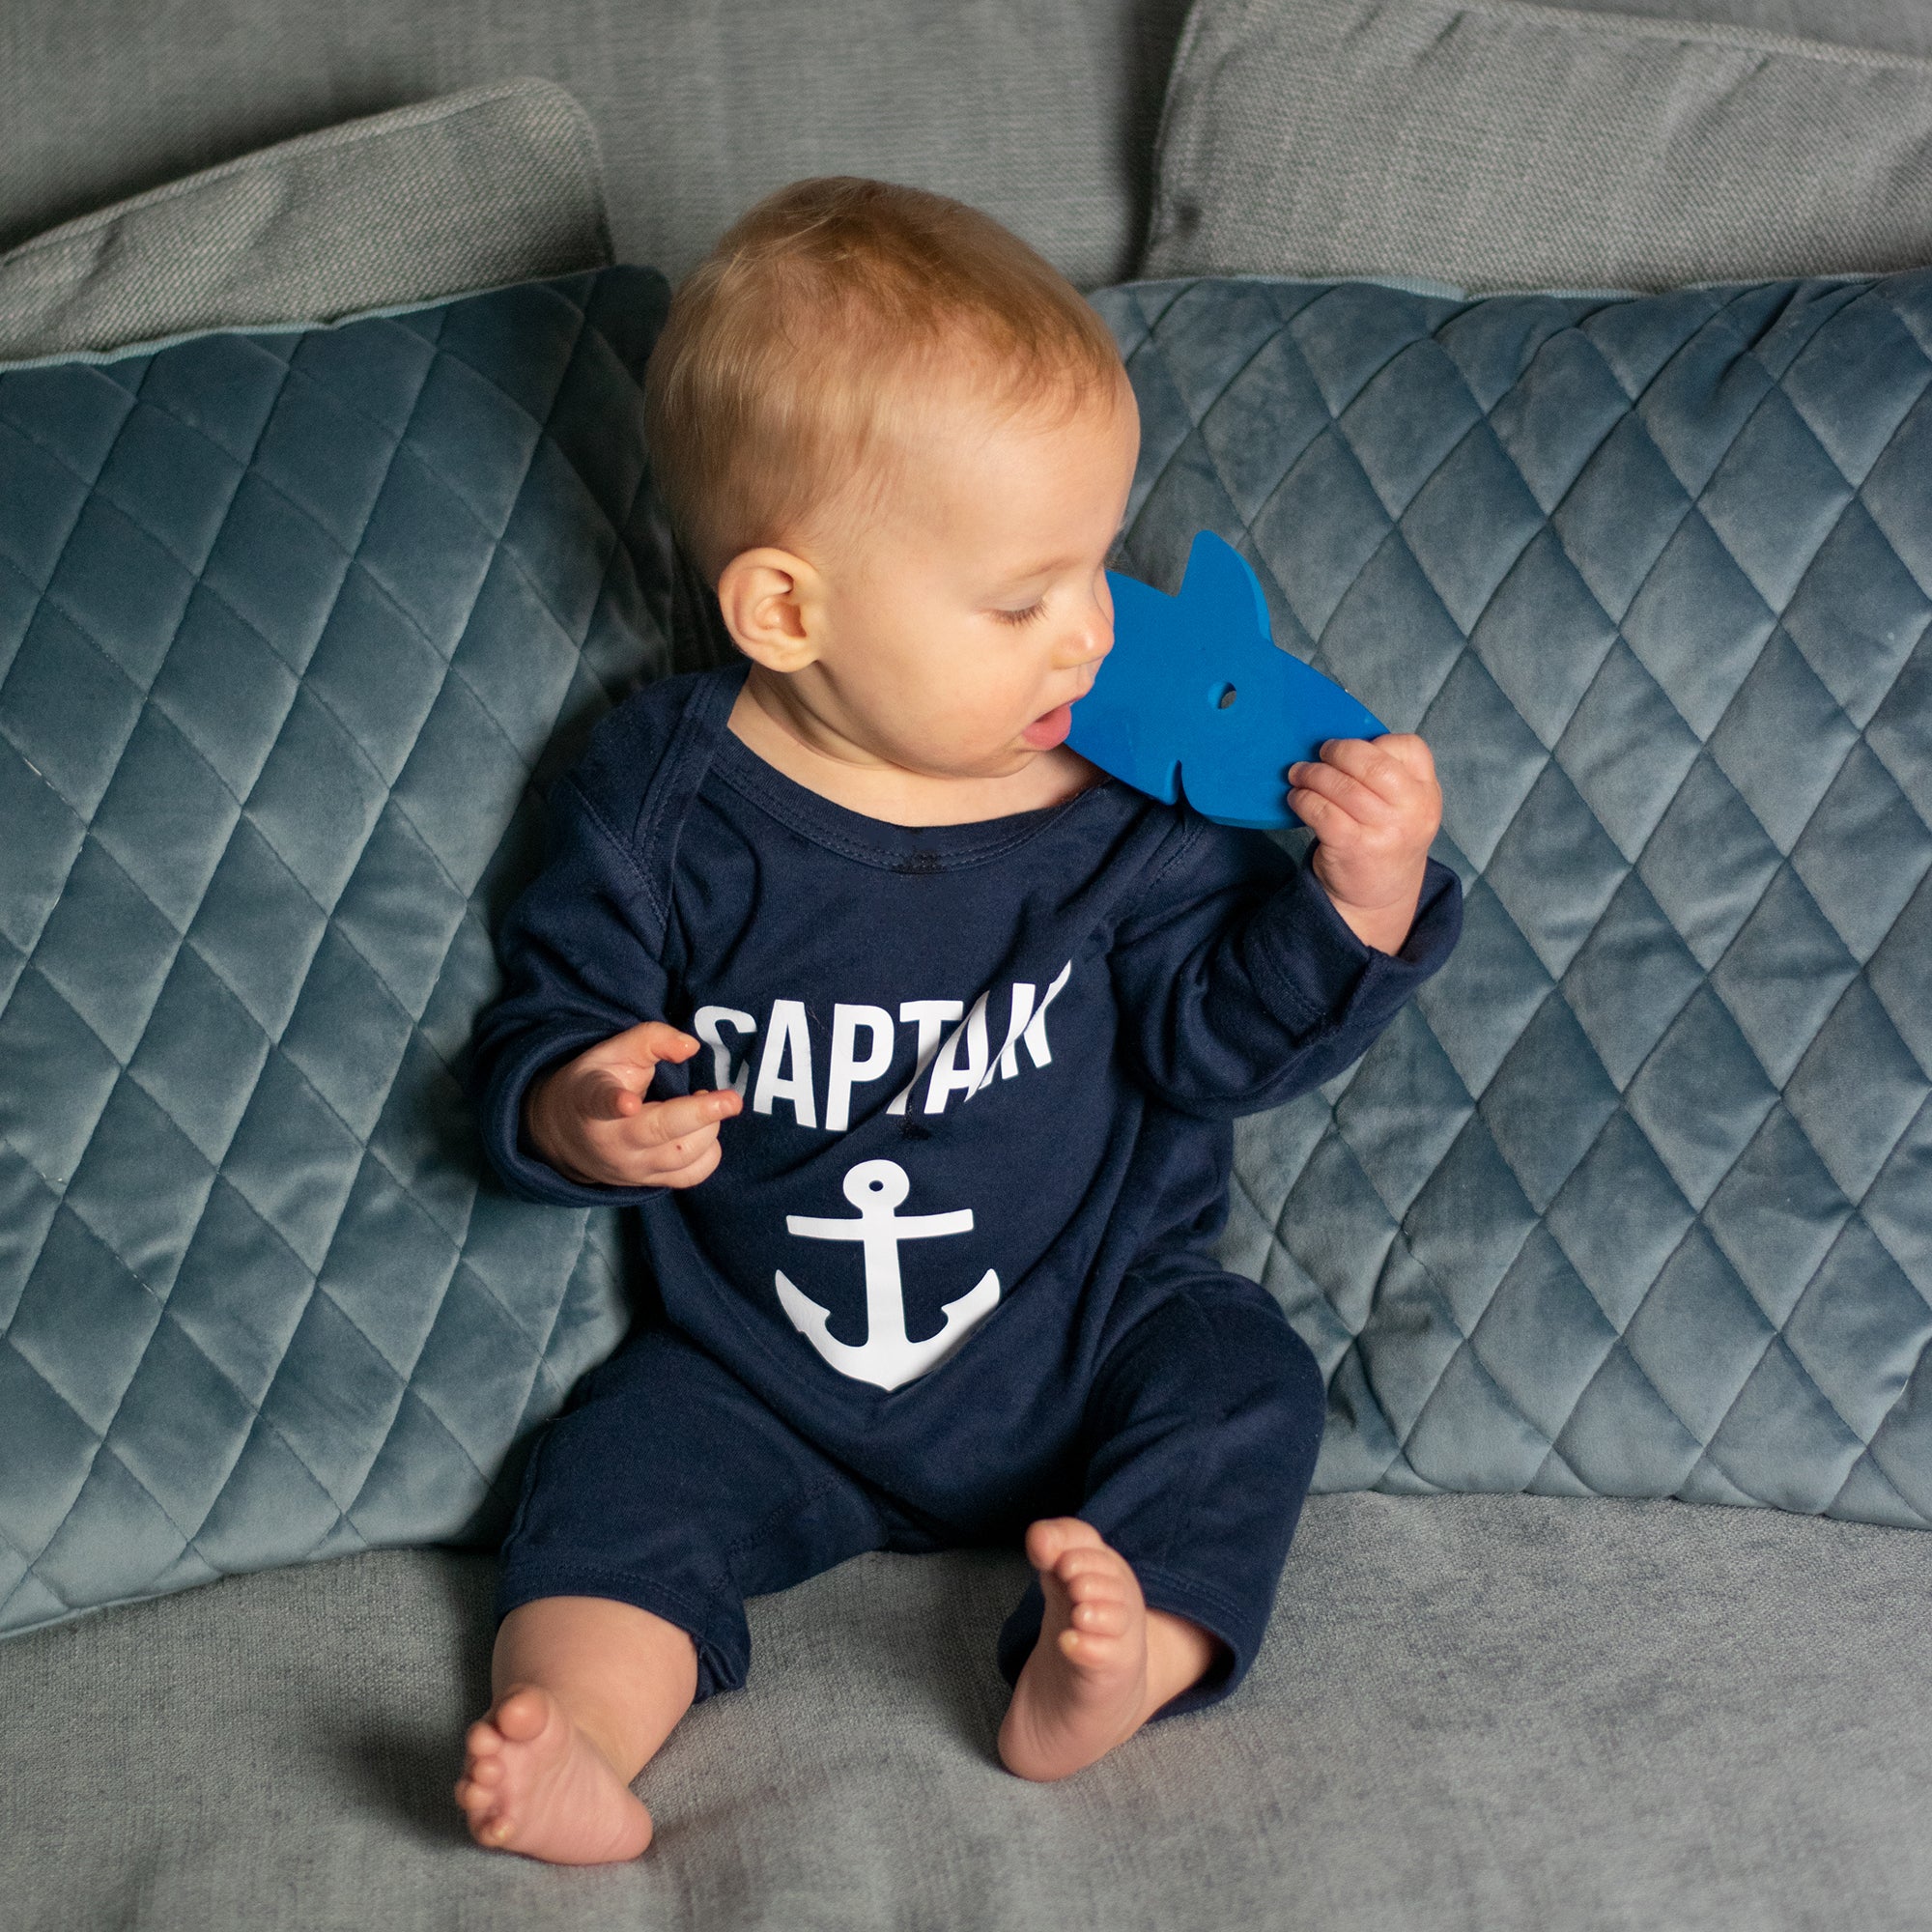 'Captain' baby romper